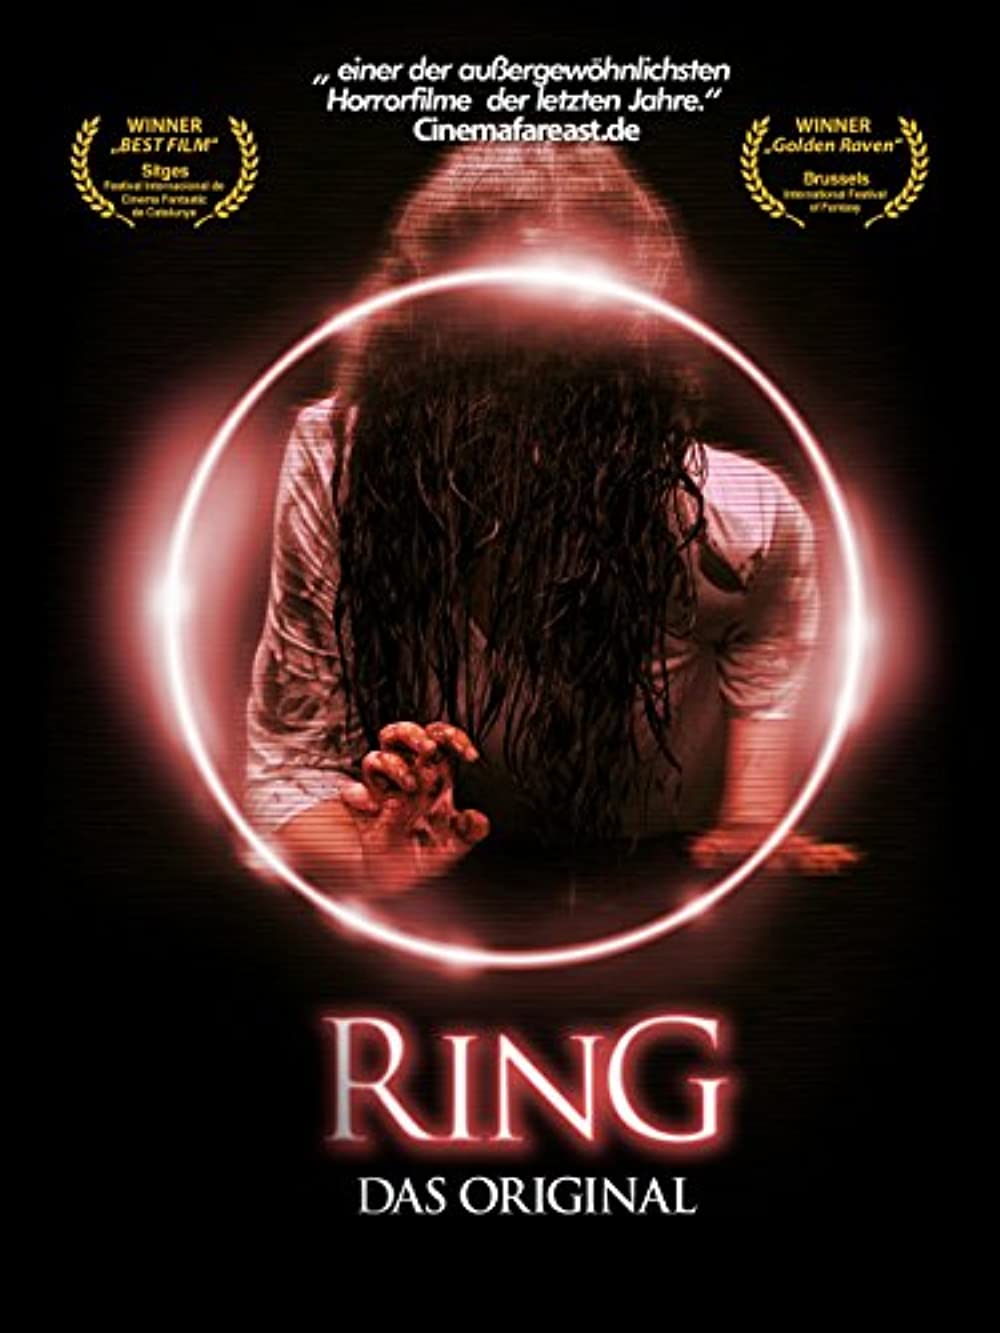 Filmbeschreibung zu Ring - Das Original (1998)